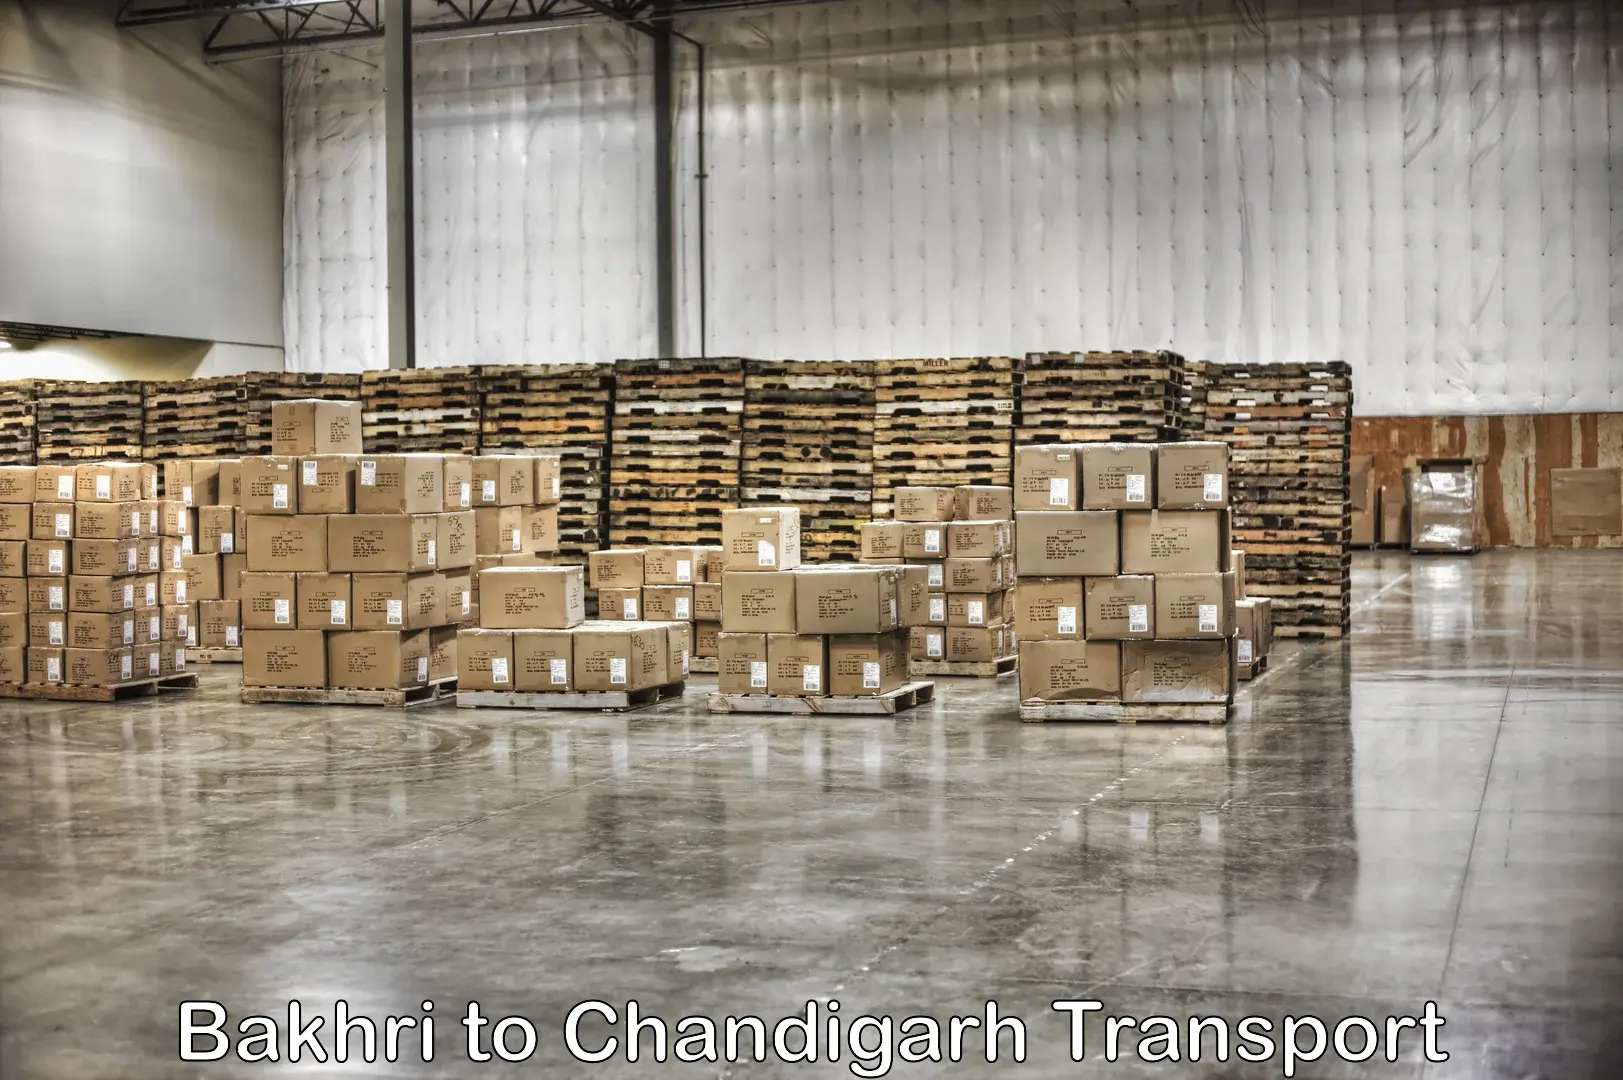 Truck transport companies in India Bakhri to Chandigarh